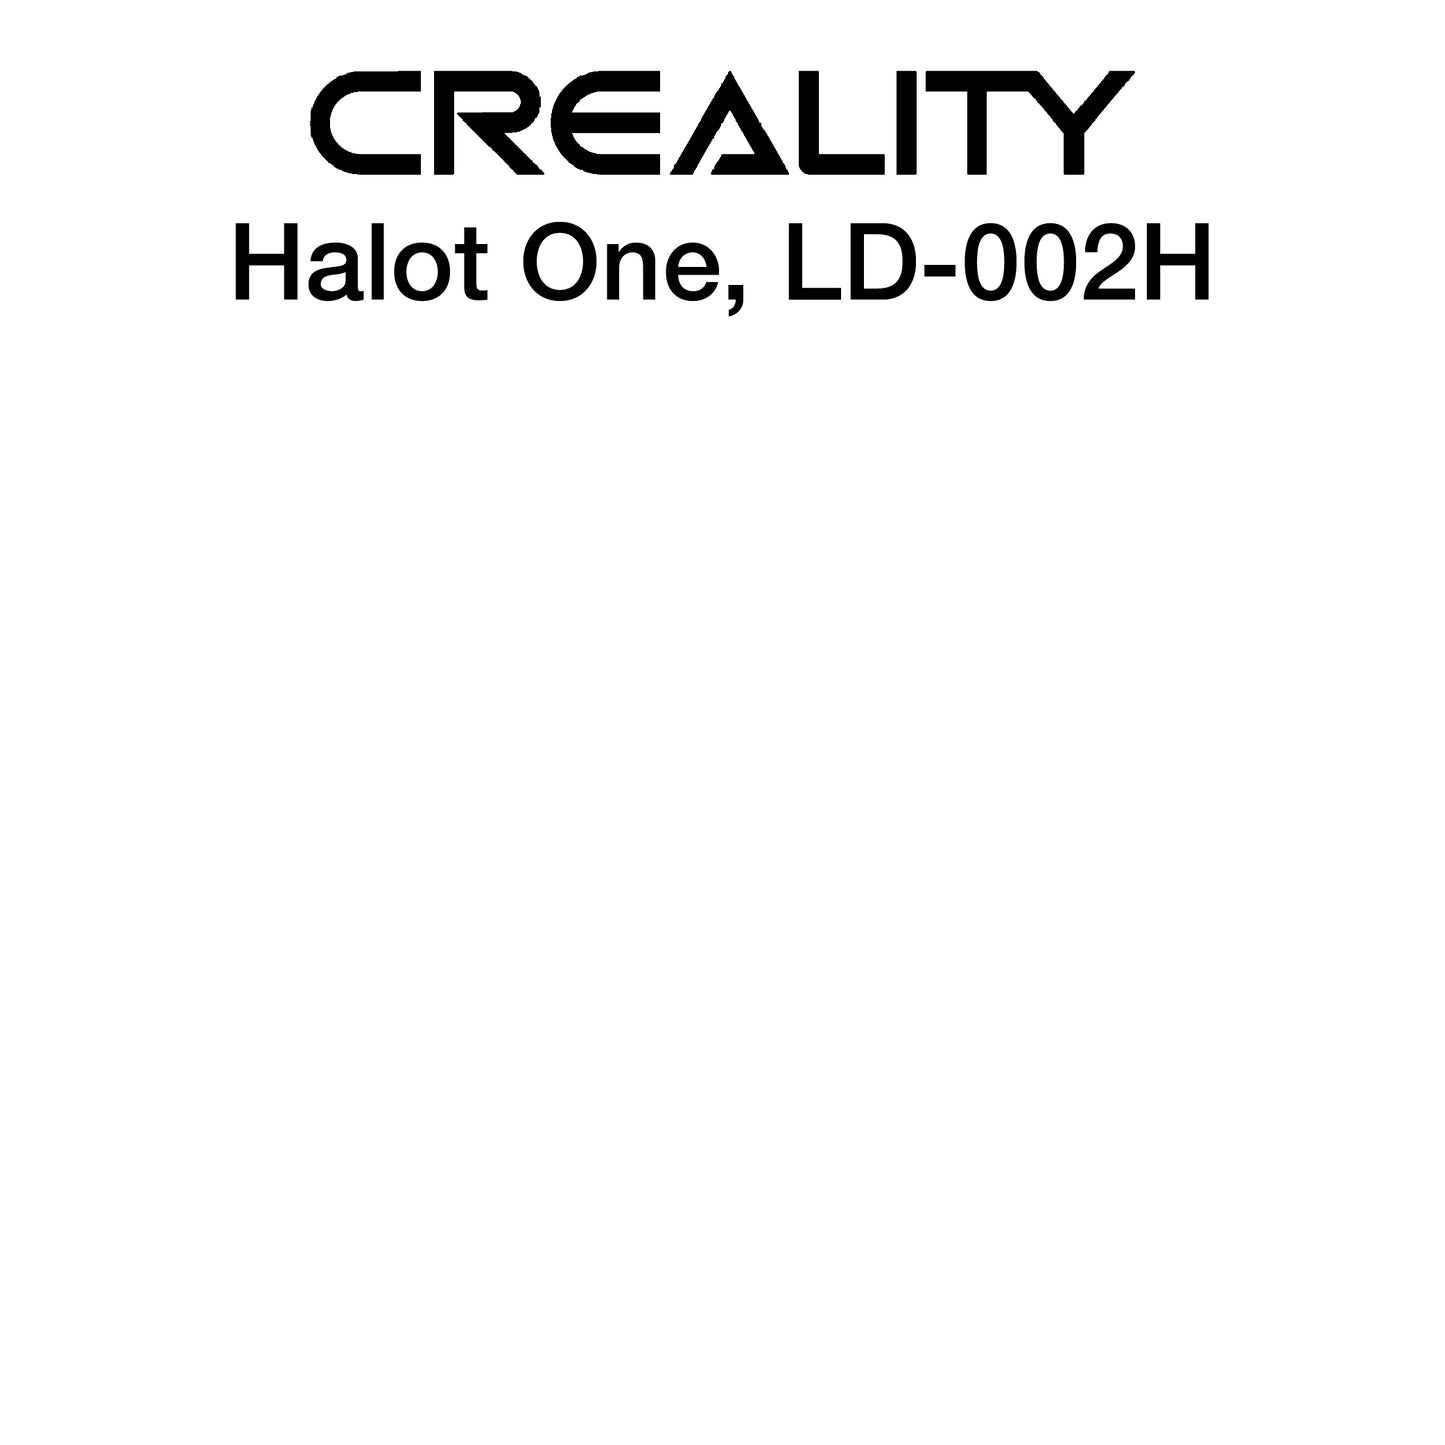 Kit - Creality Halot One and LD-002H - 138 x 85